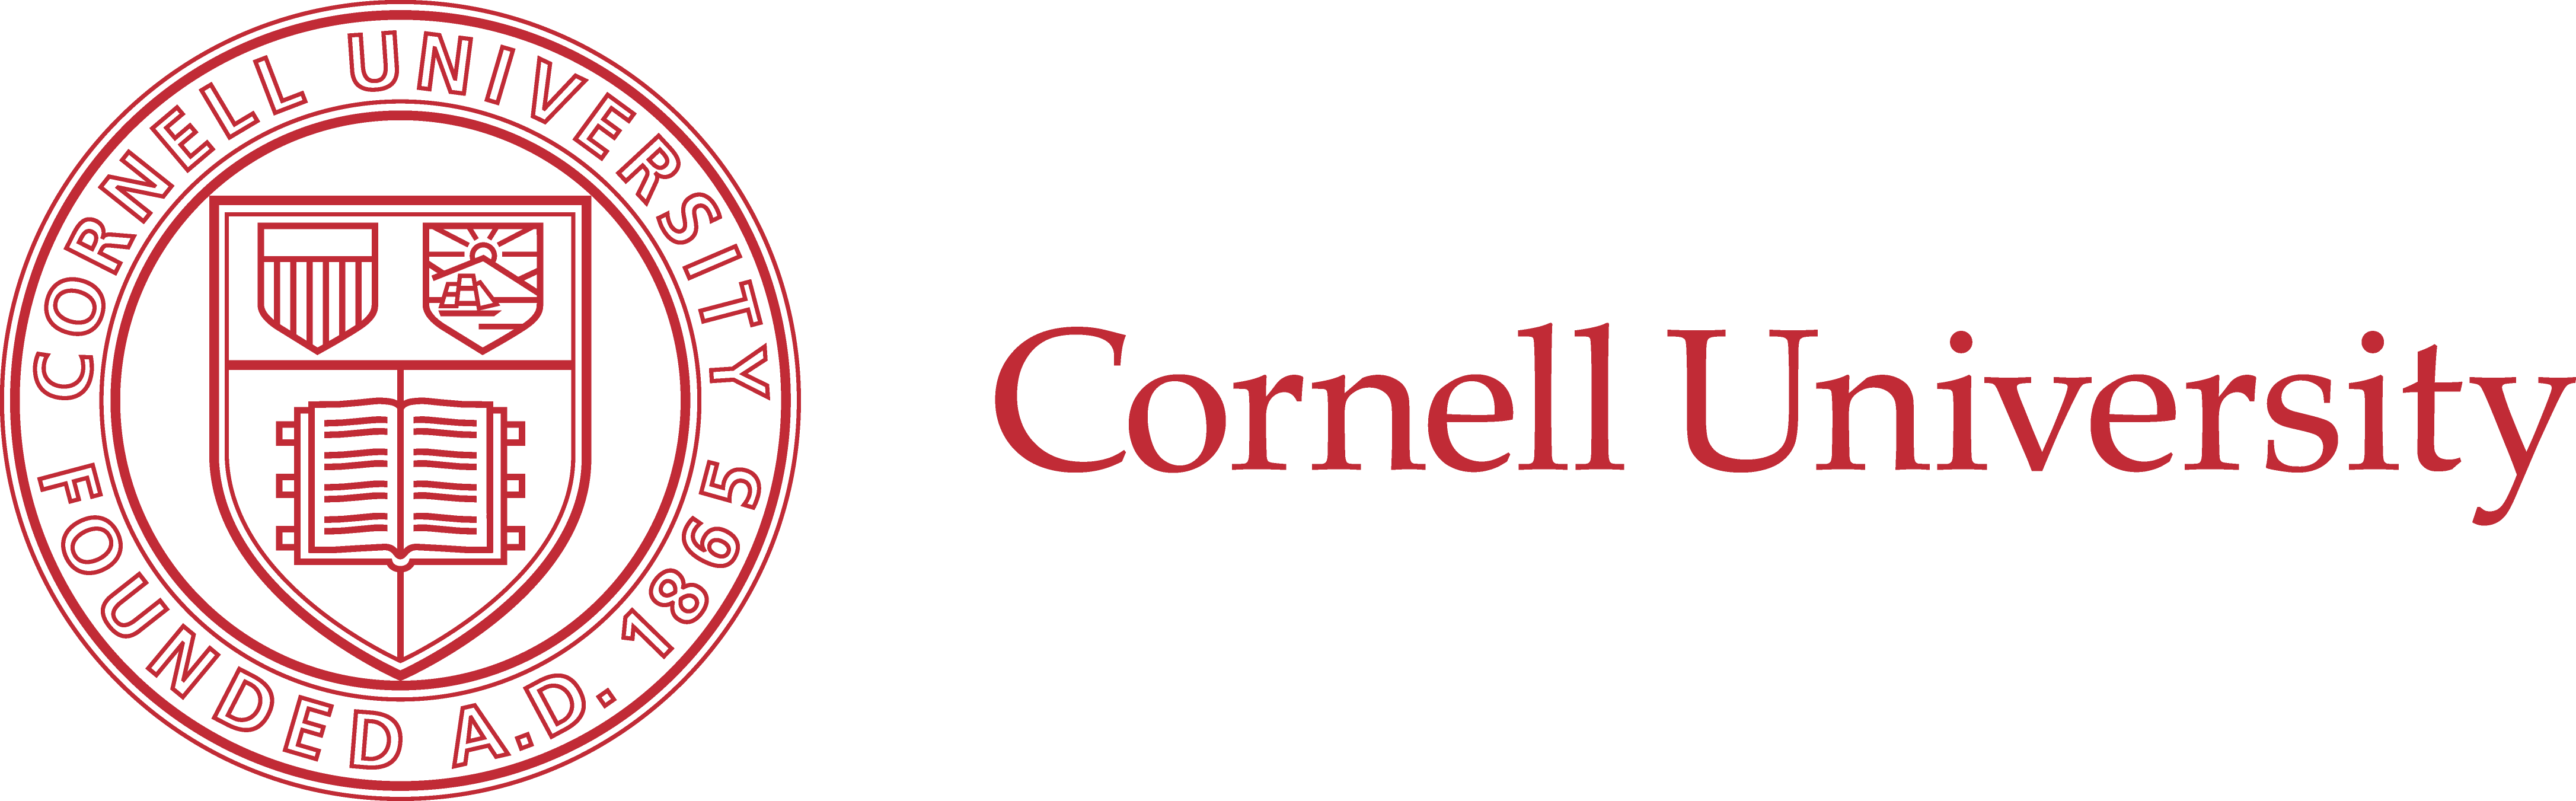 [Higher Education] Cornell University